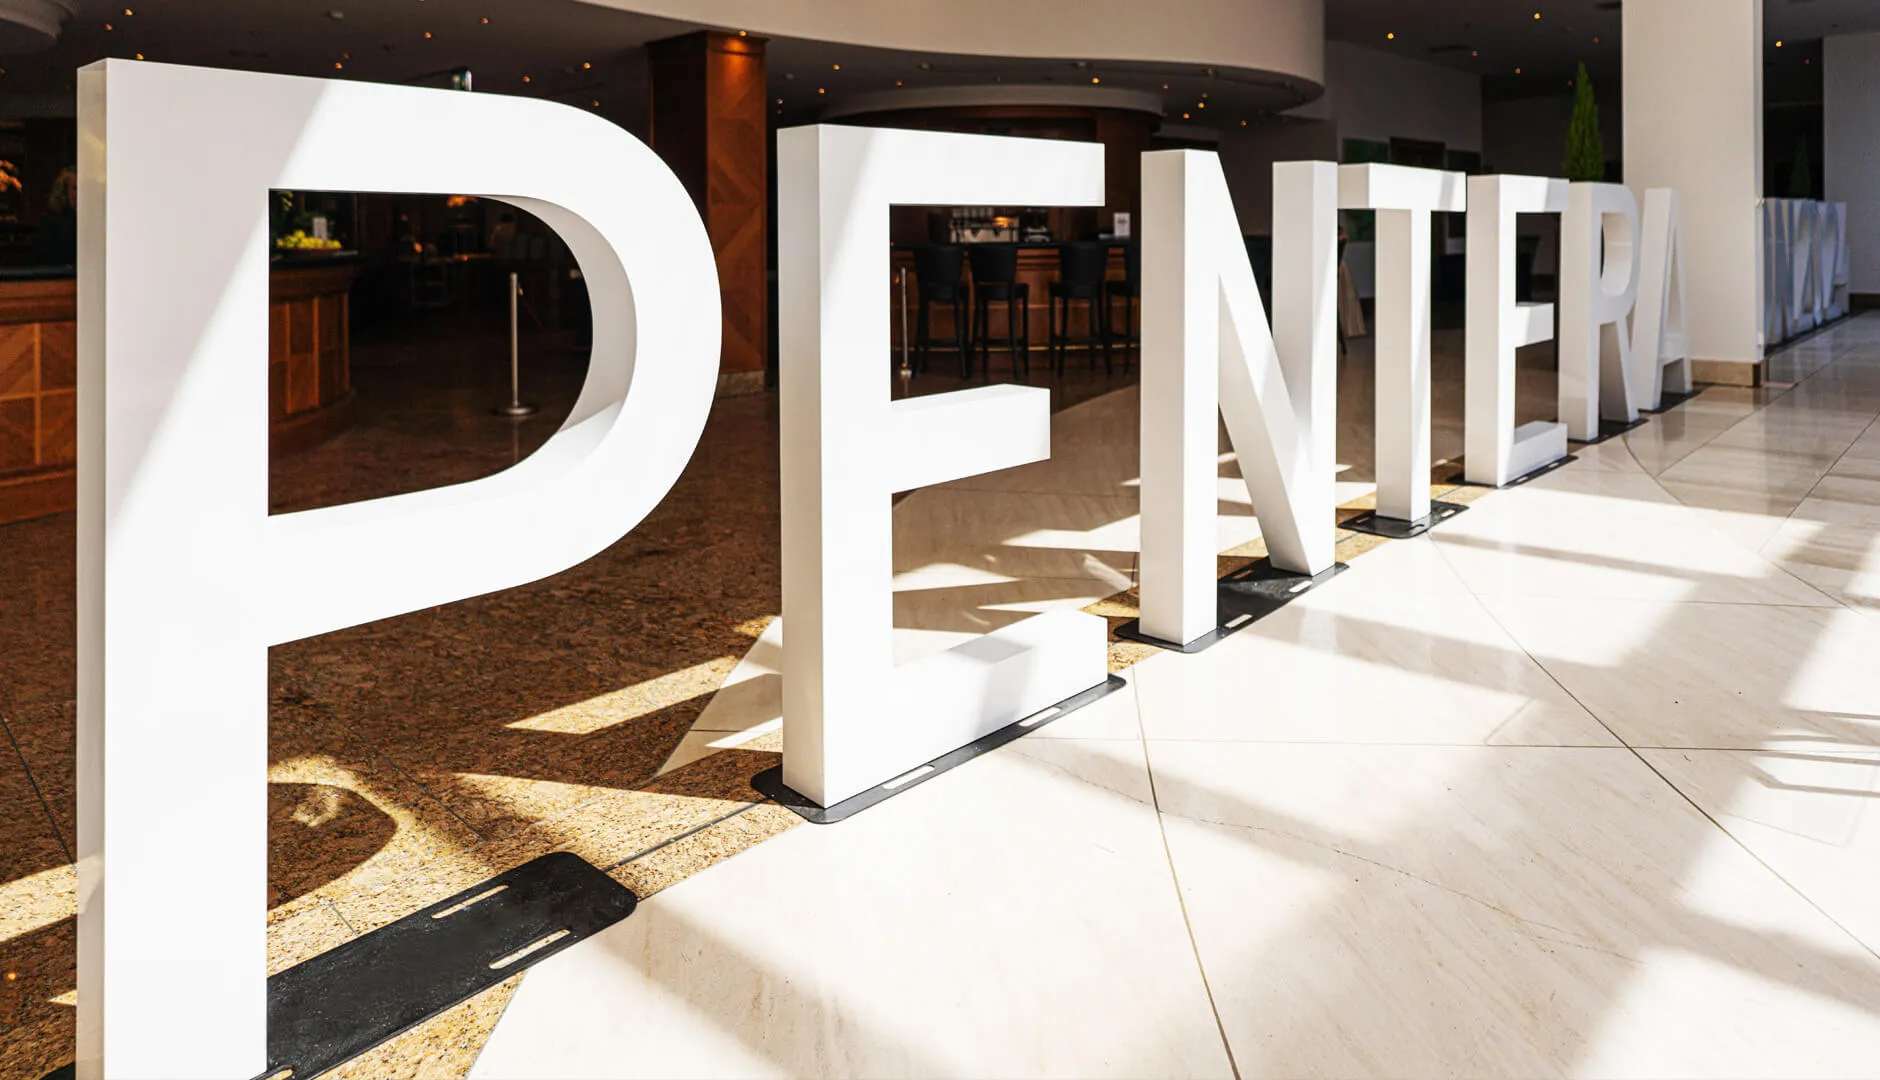 Pentera large format letters, 3D standing letters